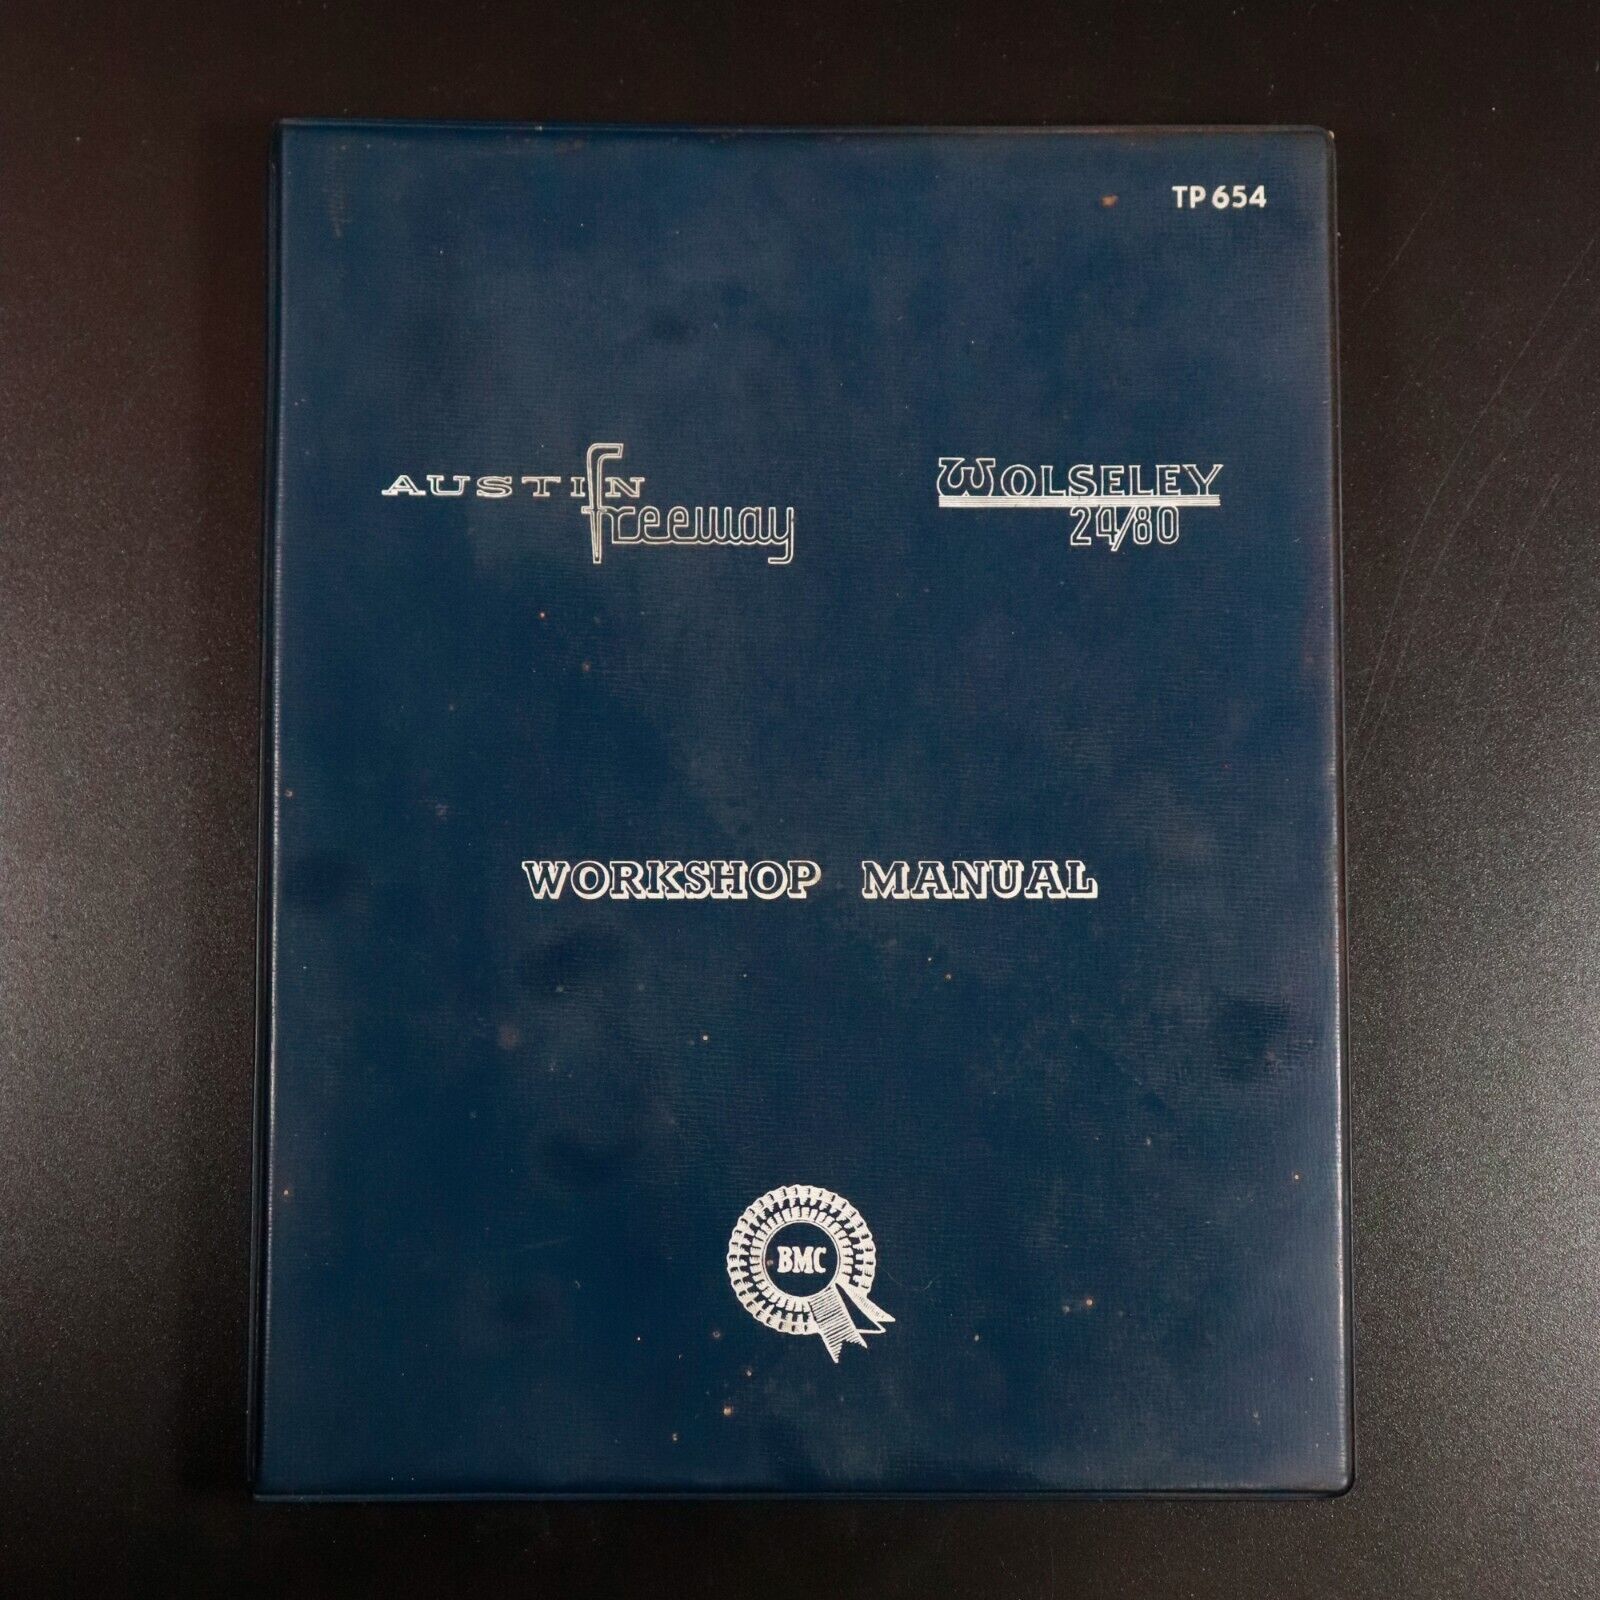 1962 Austin Freeway Wolseley 24/80 Workshop Manual Automotive Repair Book